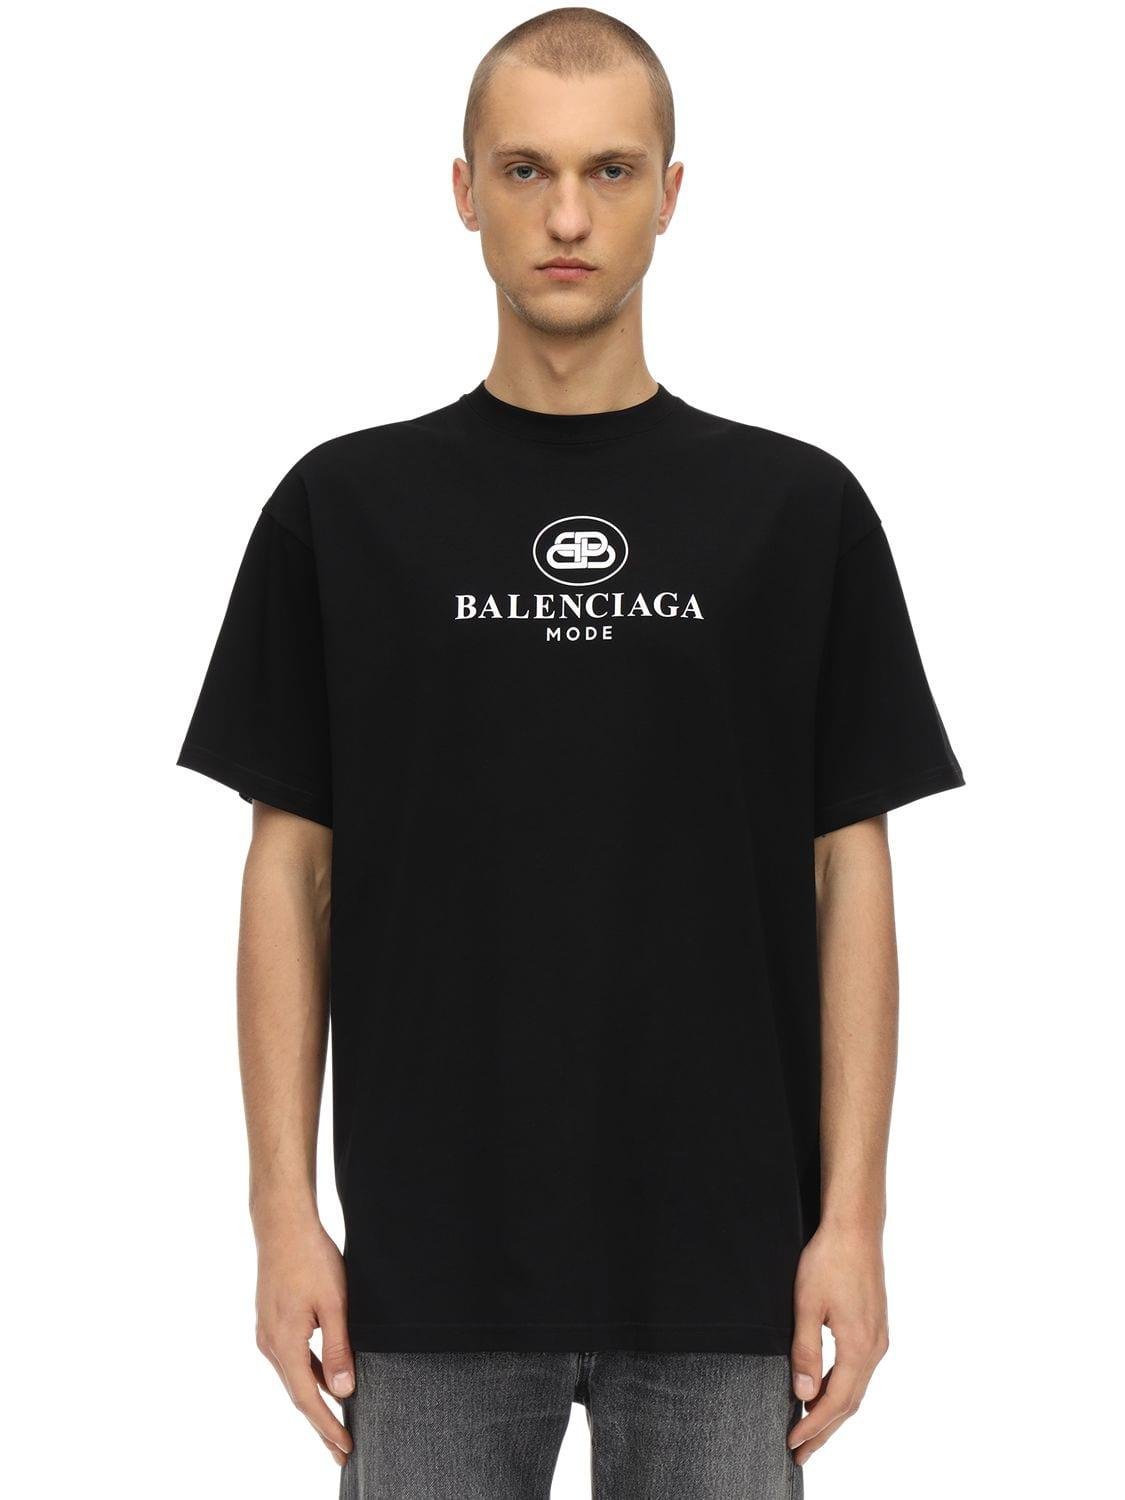 Balenciaga Mode Logo Cotton Jersey T-shirt in Black for Men - Lyst